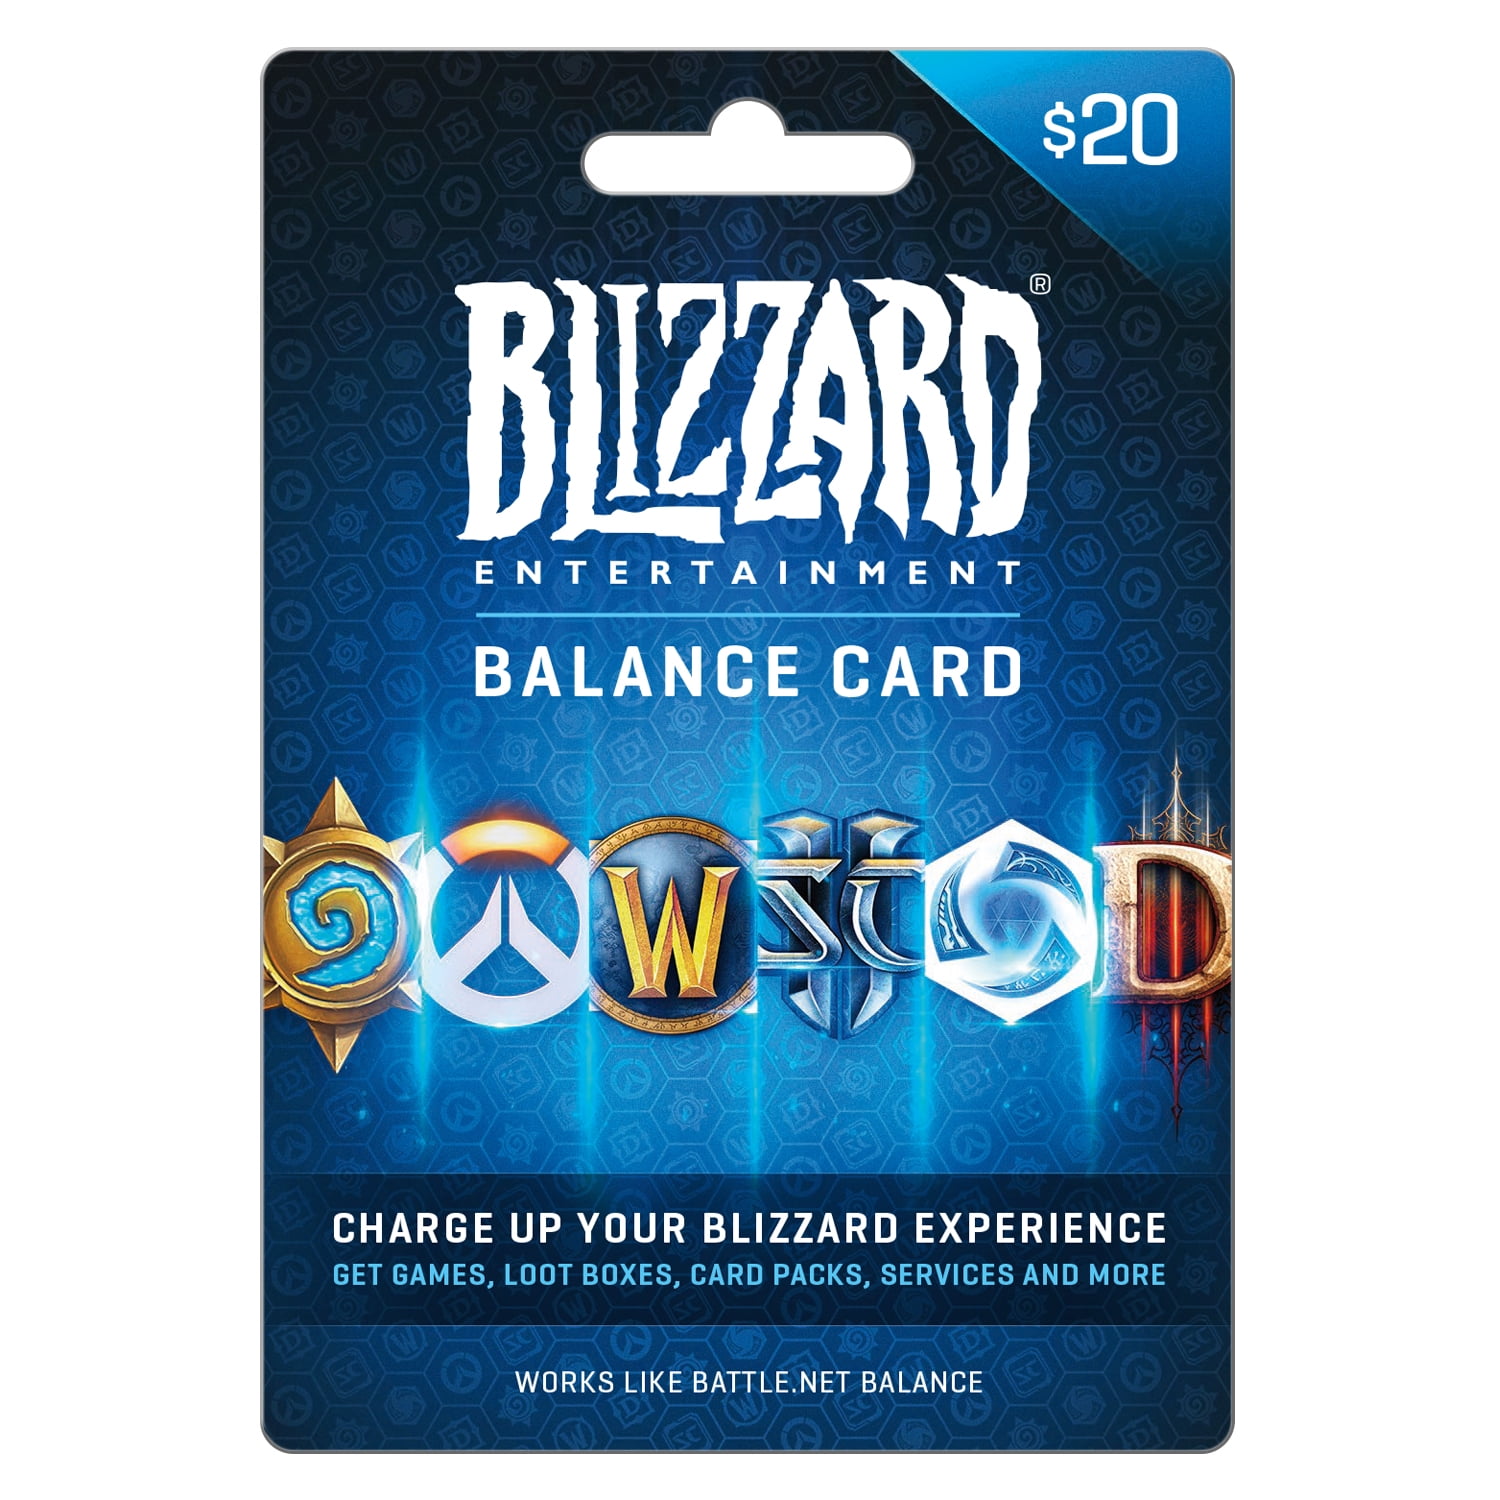 Battle Net Balance Store Gift Card 20 Blizzard Entertainment Digital Download Walmart Com Walmart Com - selling 75000 robux 1 6 hours verified seller 4